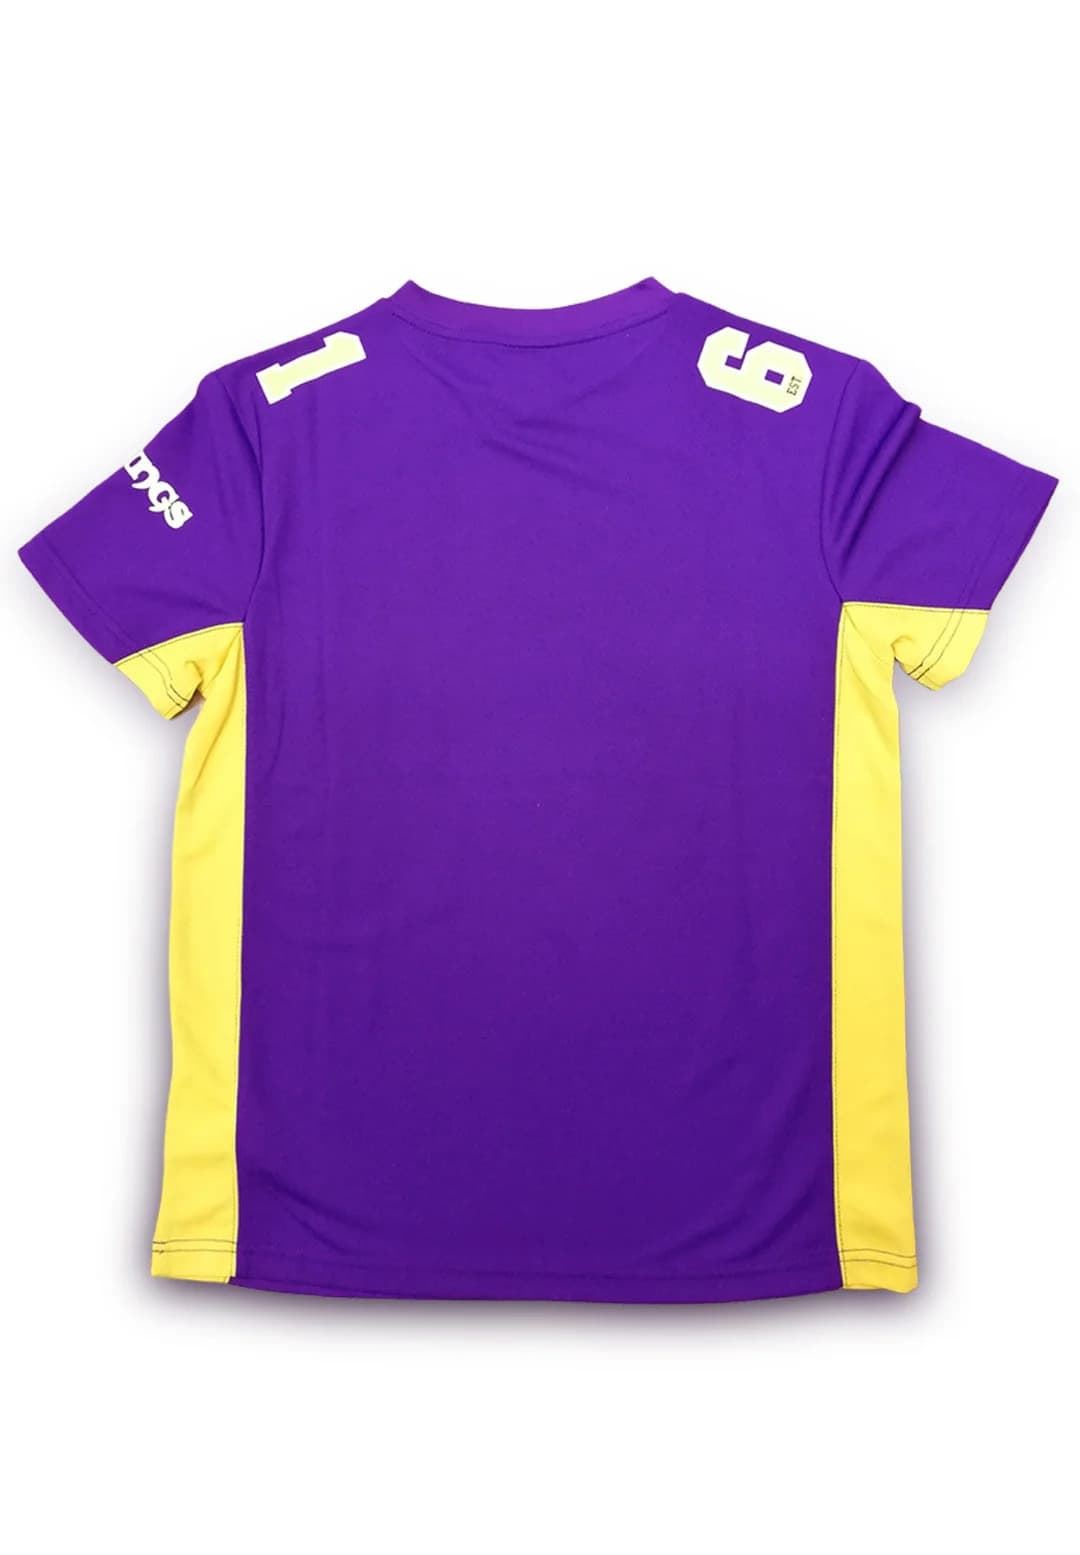 Camiseta Fanatics Vikings 007U-597F-9M-02S purple - Imagen 2